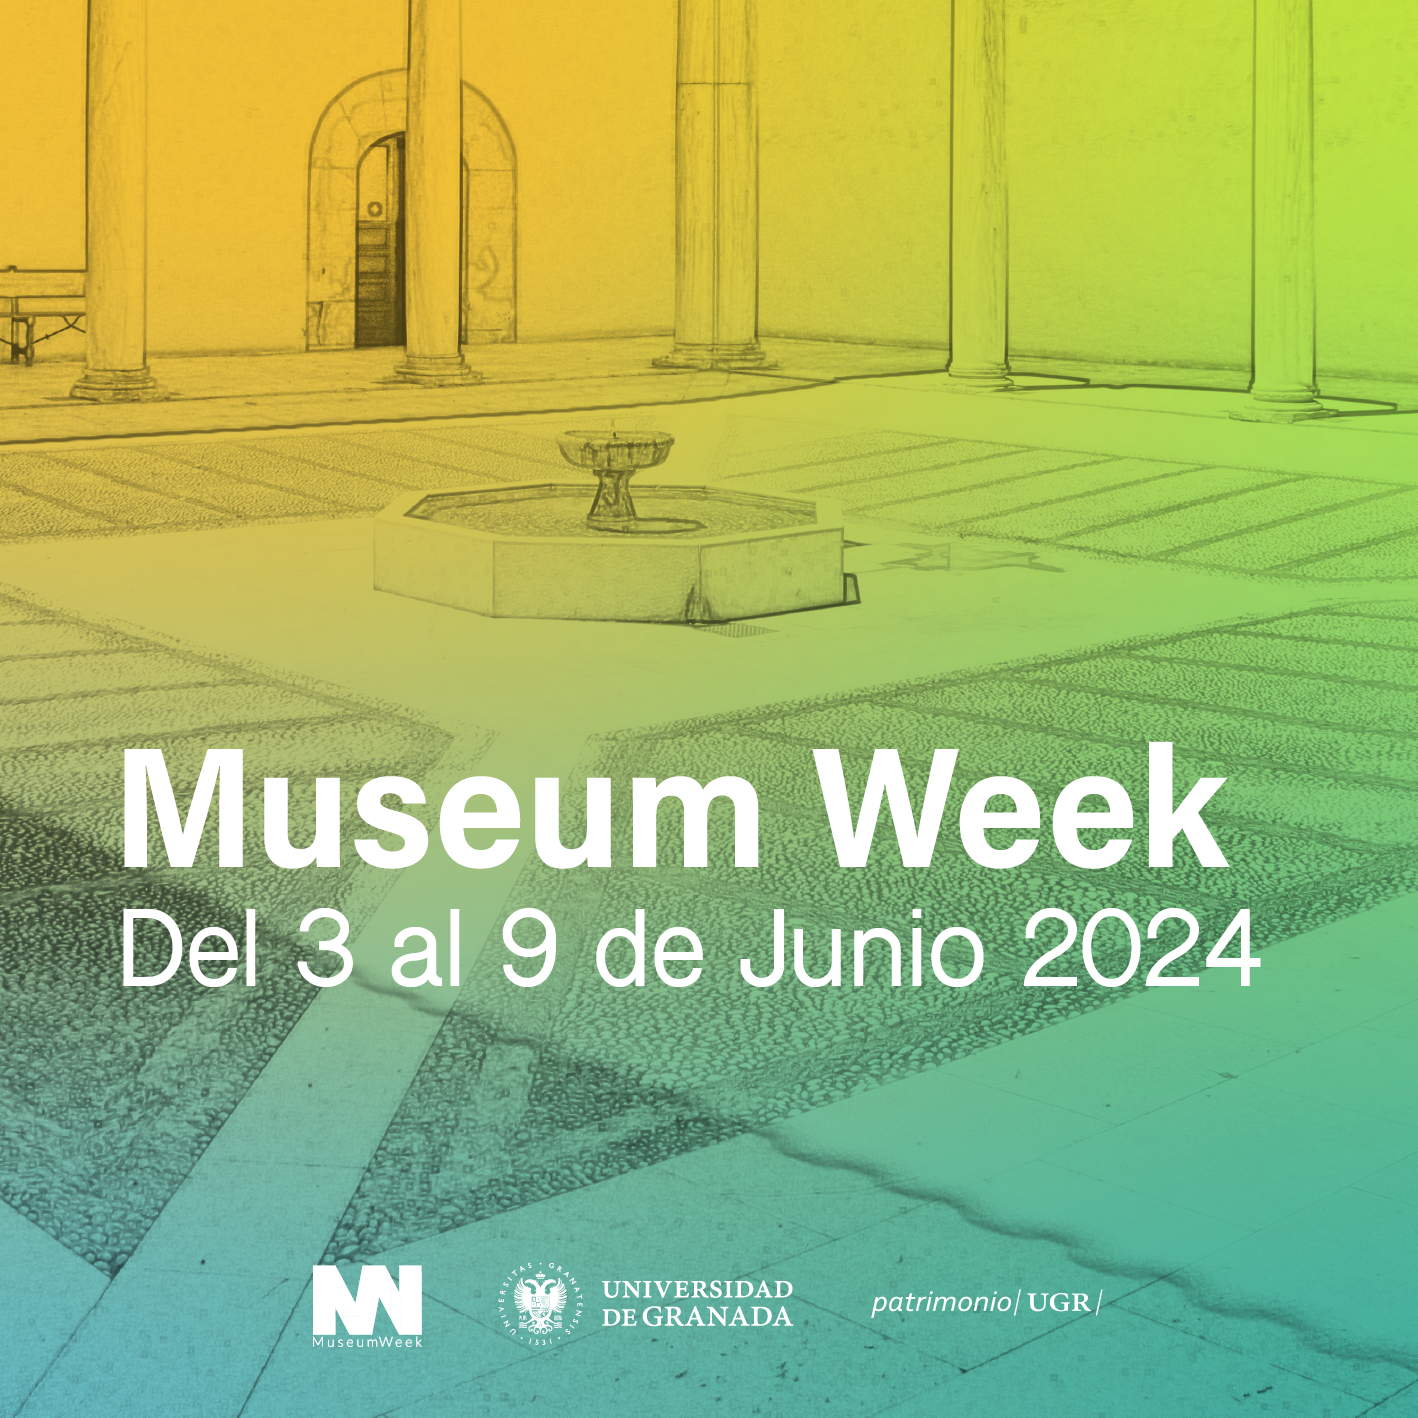 La UGR se suma a la ‘Museum Week